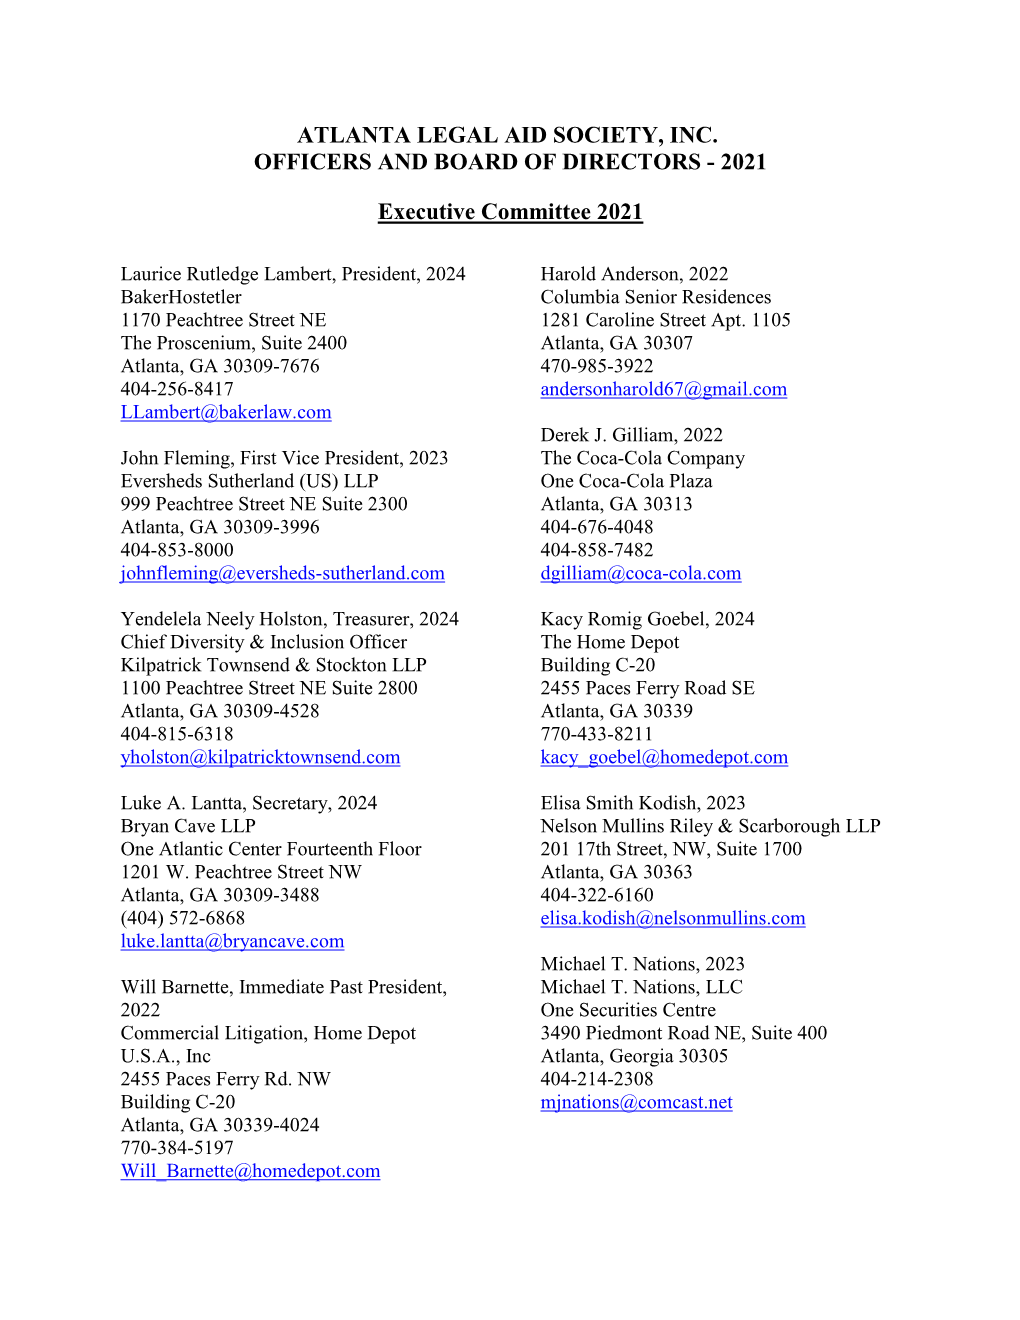 Atlanta Legal Aid Society, Inc. Officers and Board of Directors - 2021